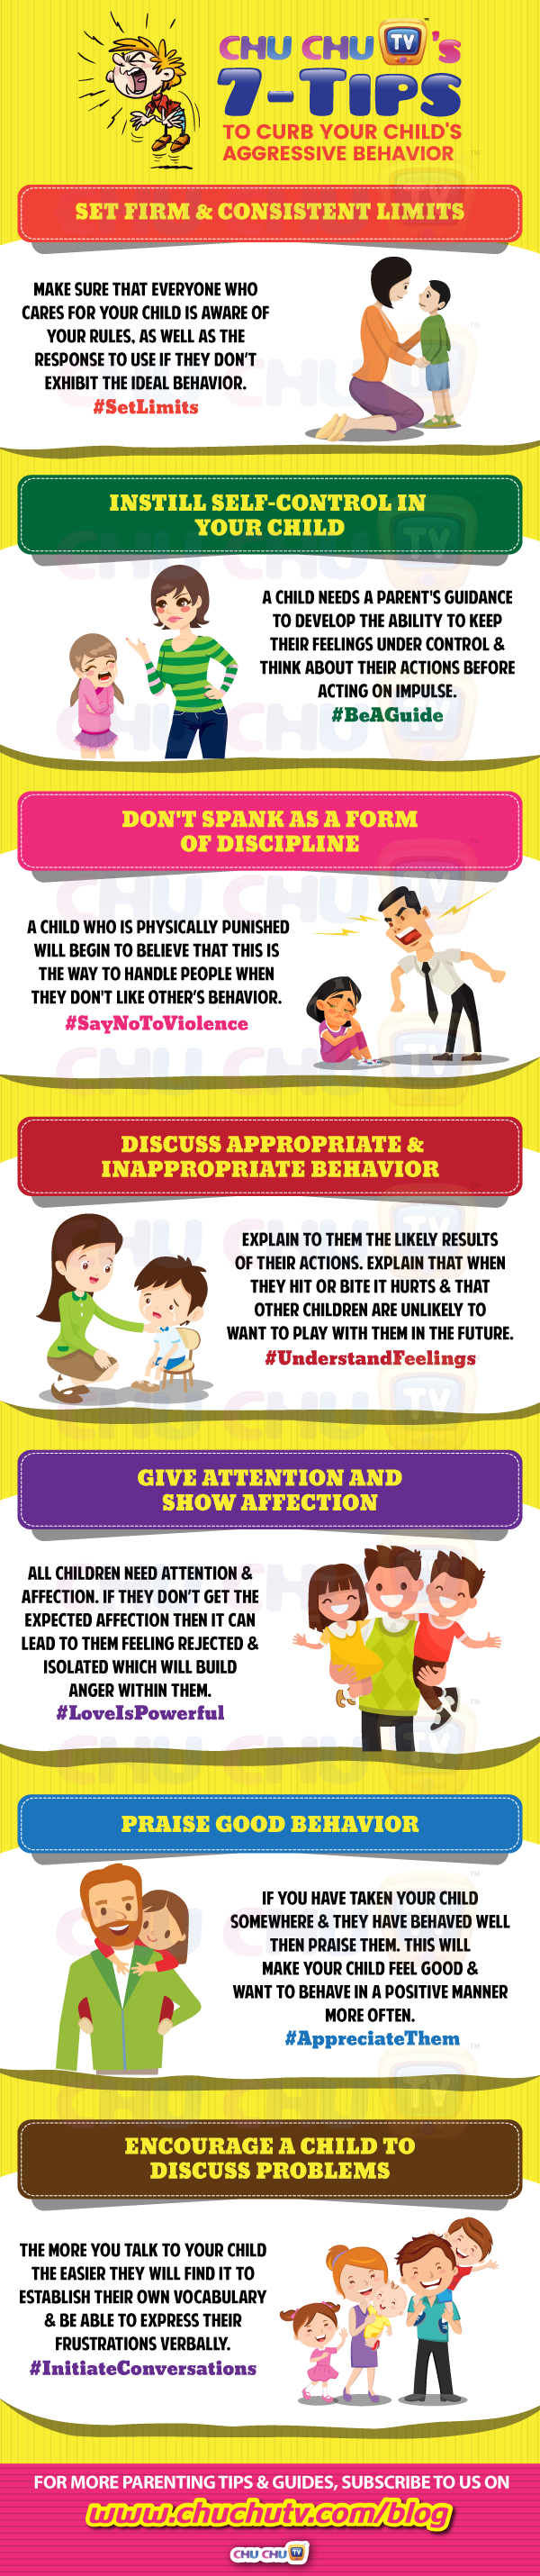 Seven Tips to Curb Your Child's Aggressive Behavior